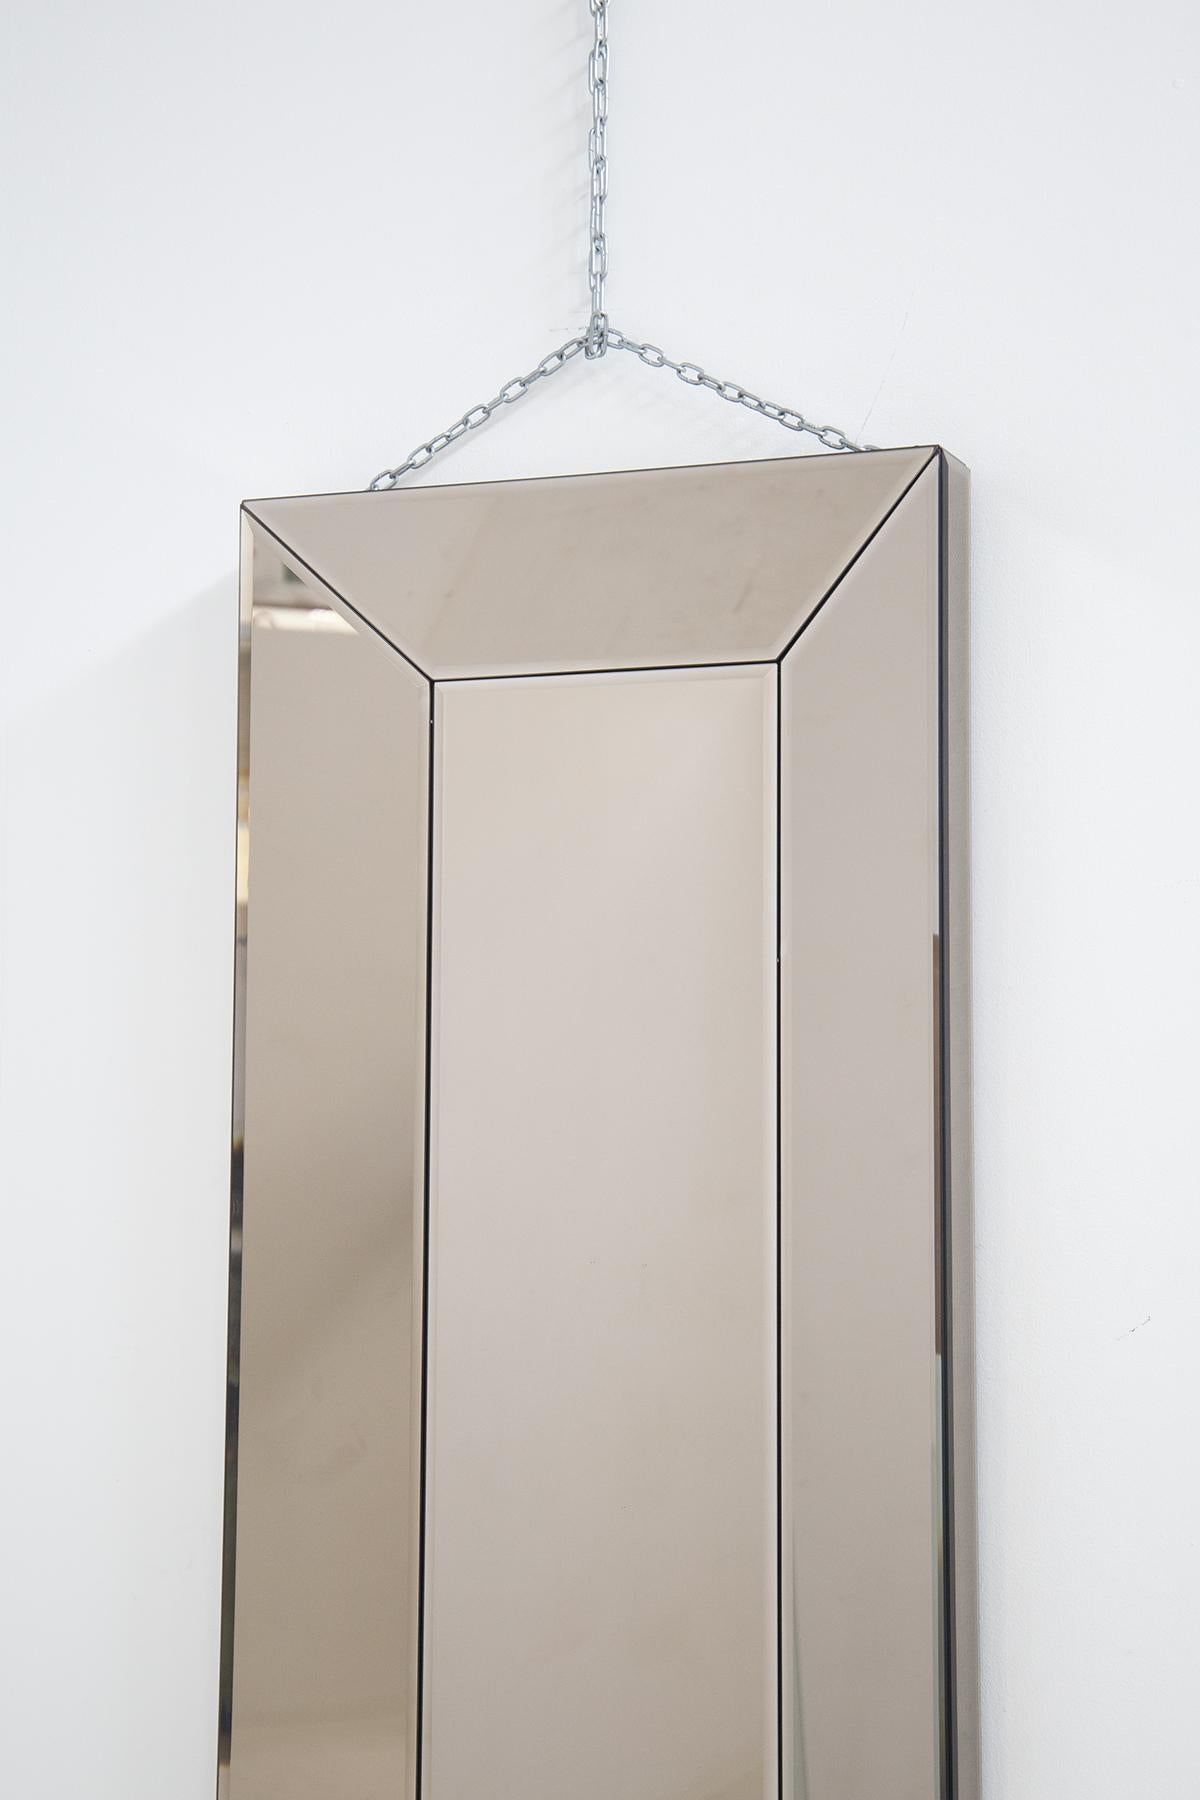 Velvet Roberto Cavalli Wall Mirror in Fumè Glass, Original Label